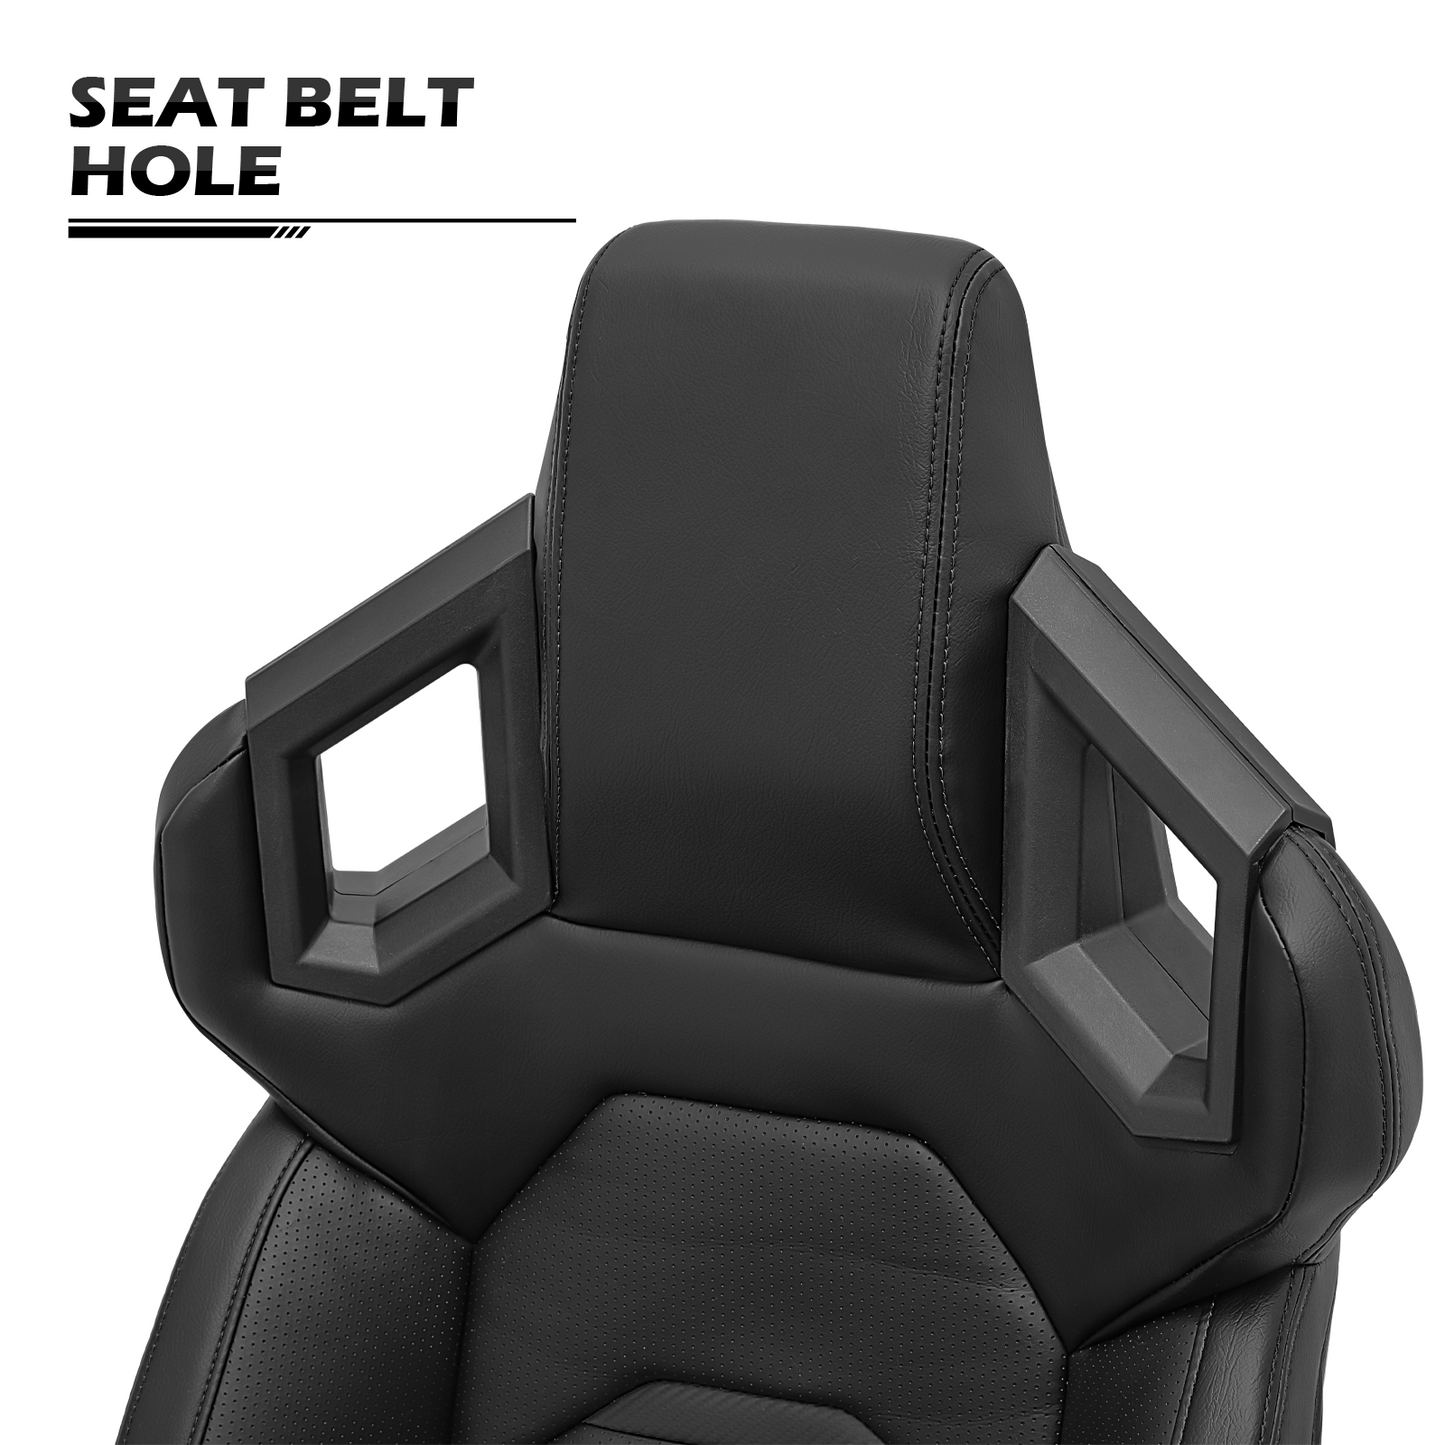 PU leather Gaming Seat - Black - For Racing Simulator